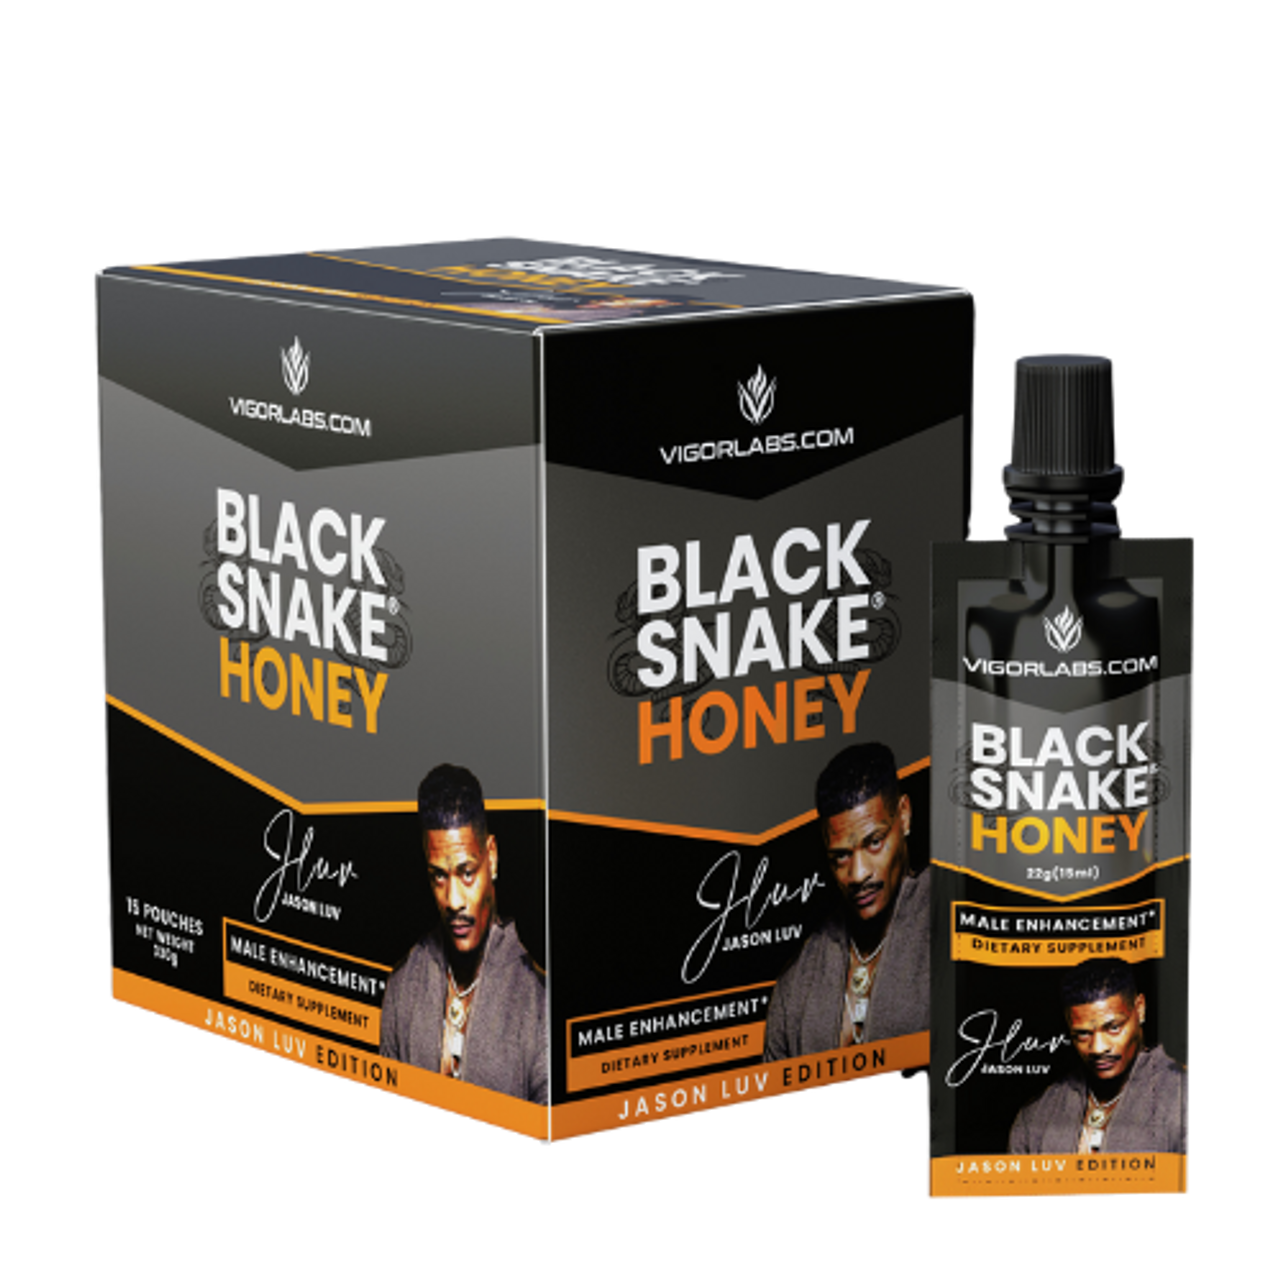 Vigor Labs Black Snake Honey box